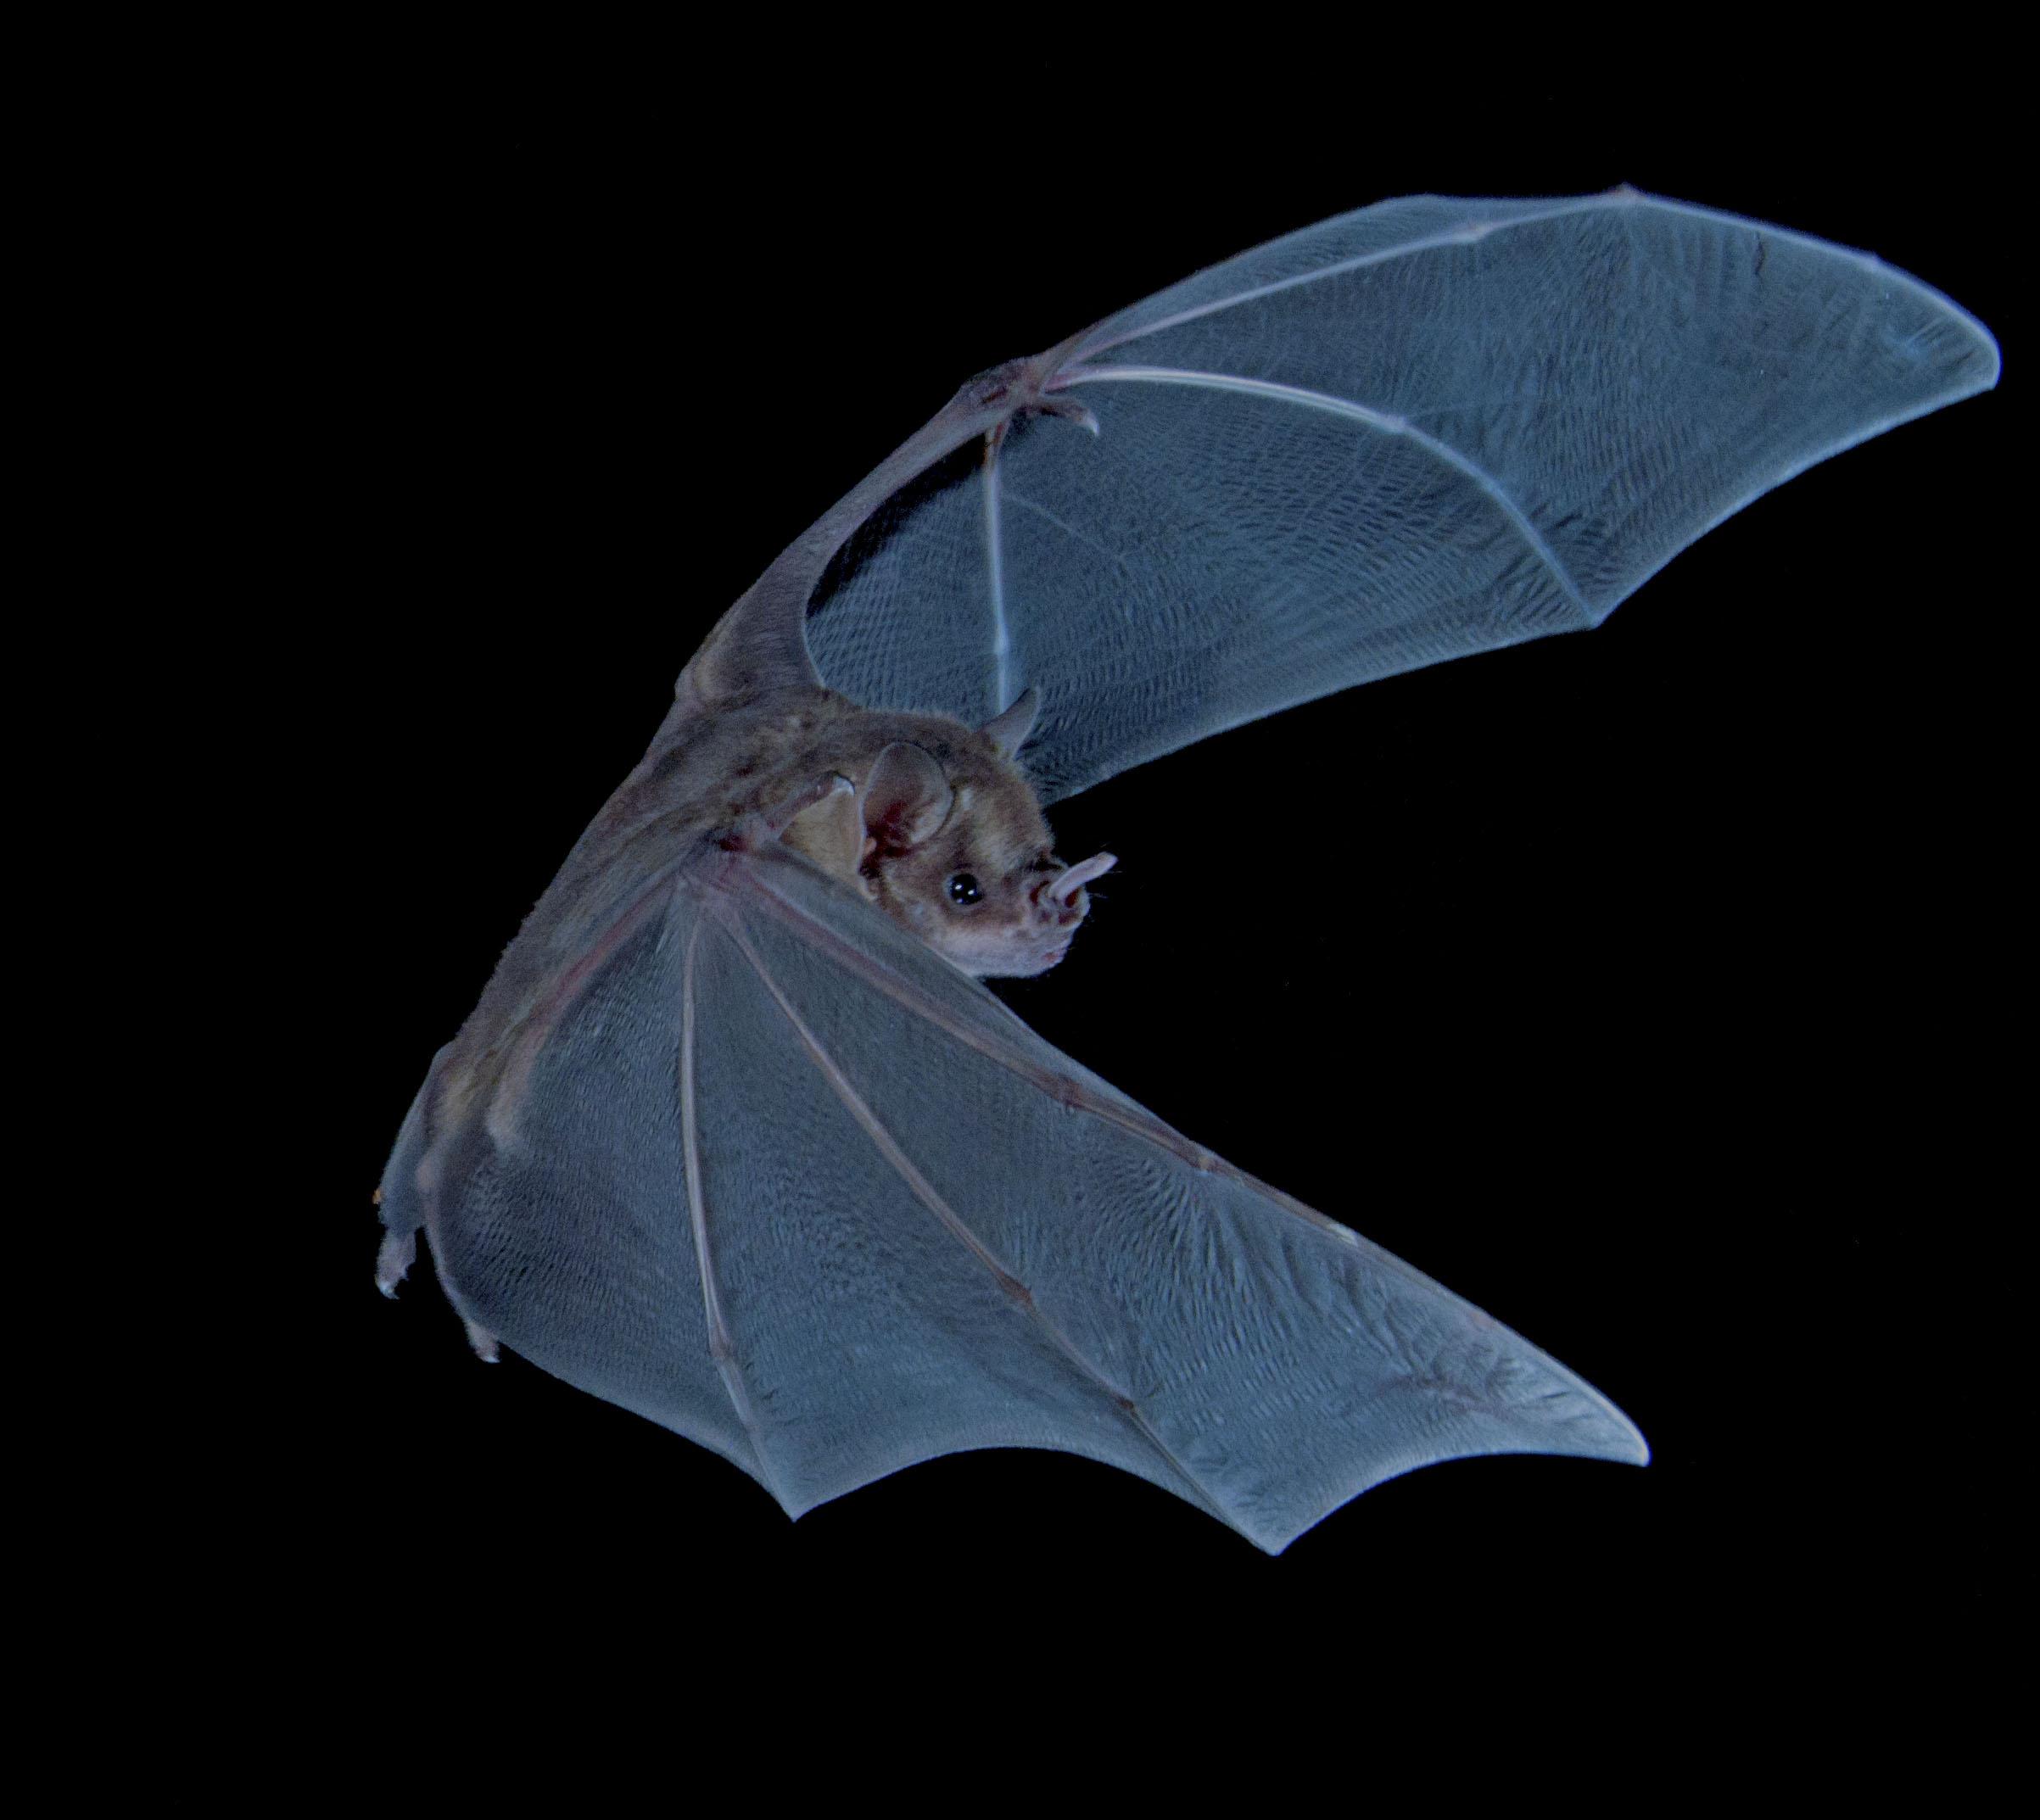 photograph of a Jamaican fruit eating bat in flight